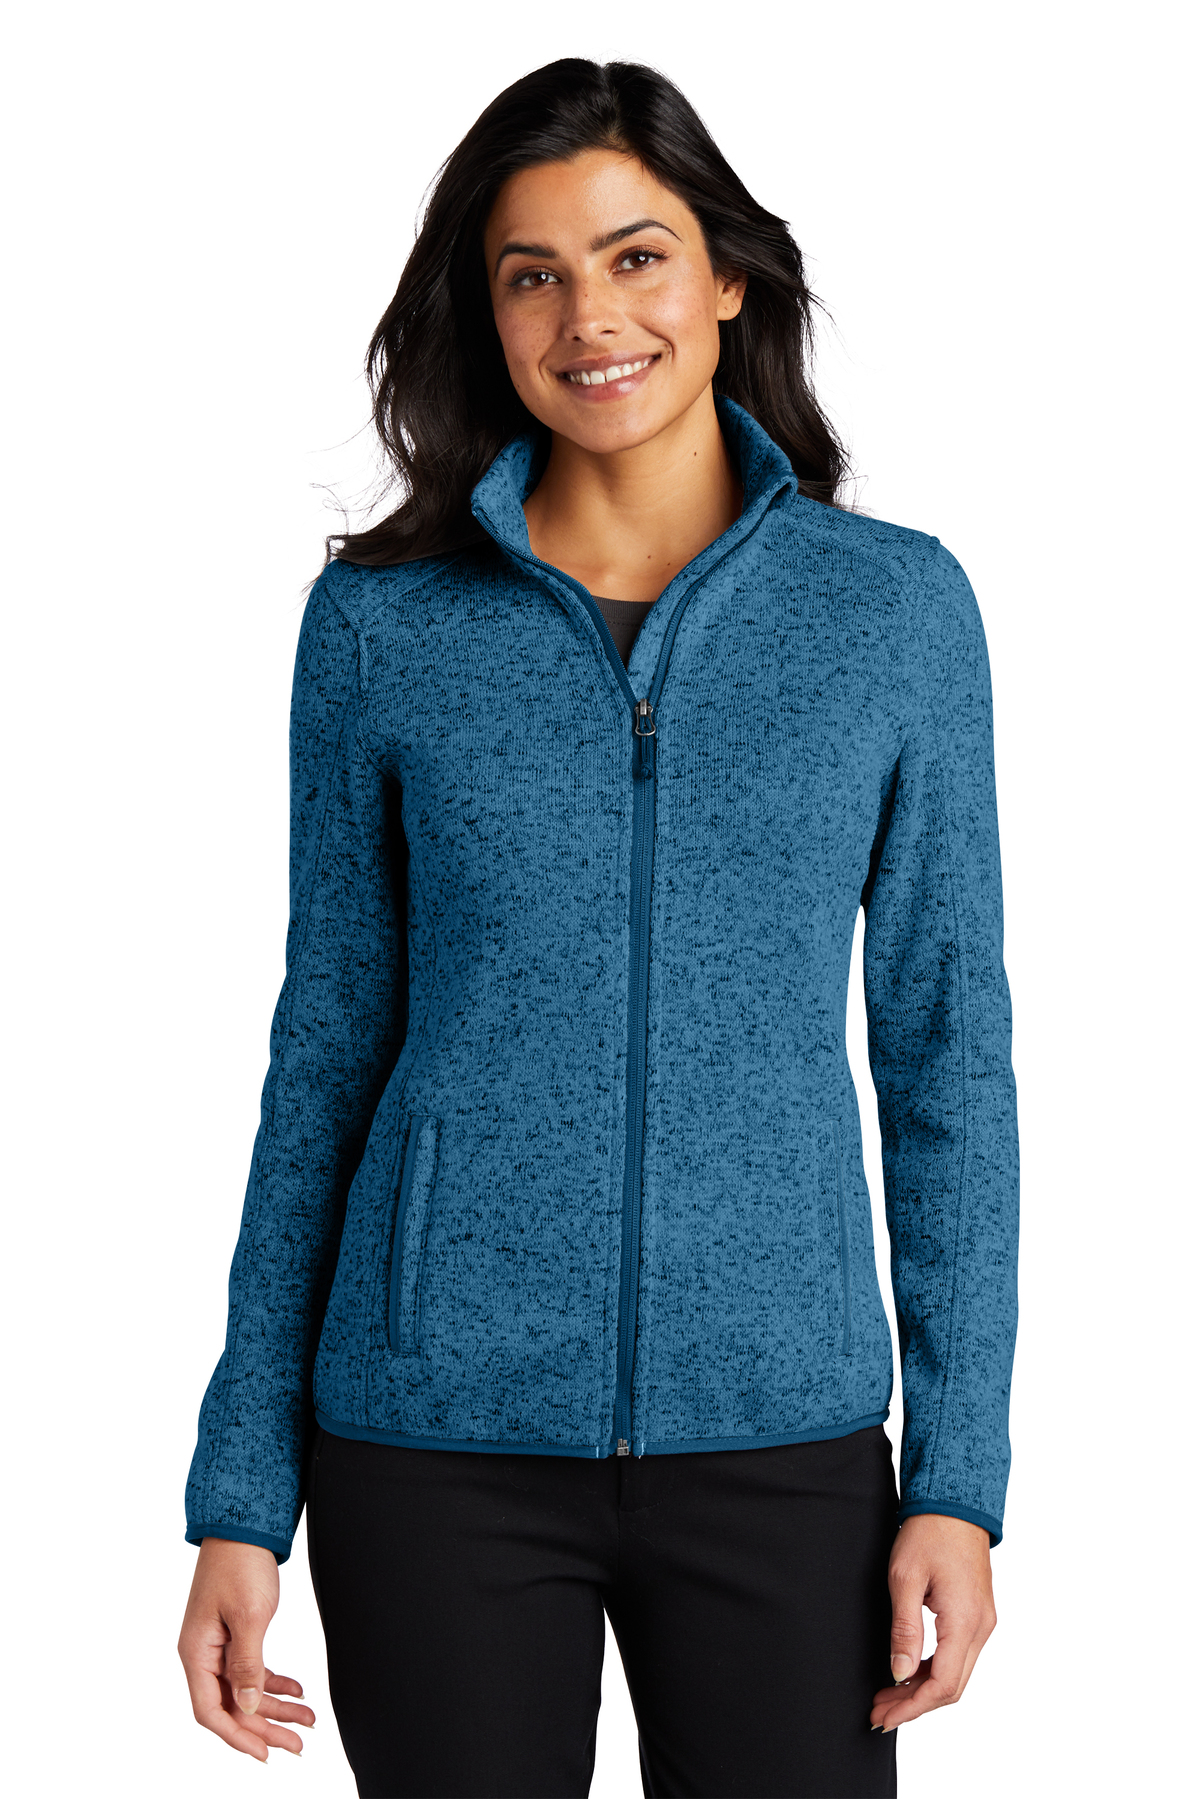 Port Authority® Sweater Fleece Jacket - Women's** (Restrictions Apply - see  description) - Western Heritage Company, Inc